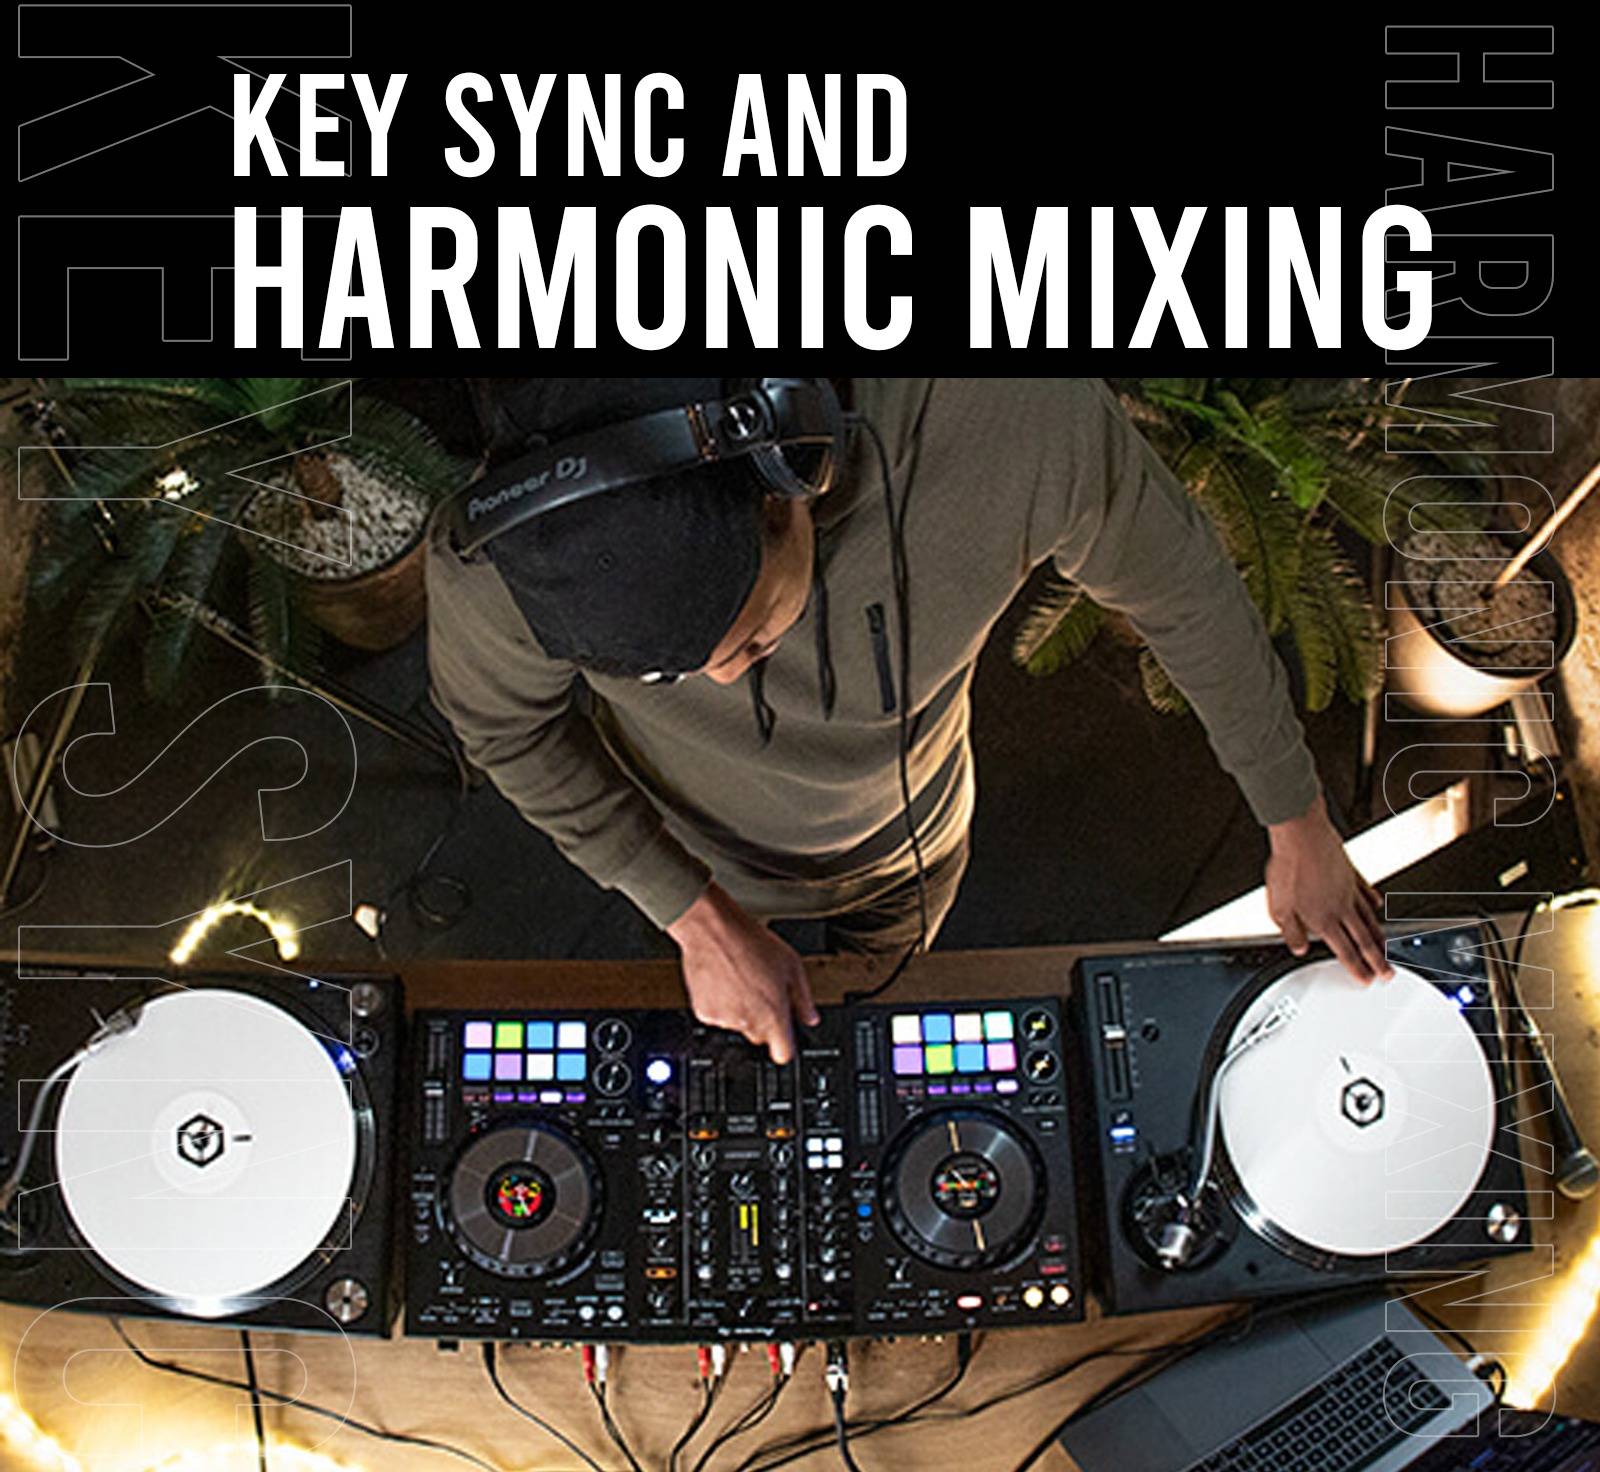 Harmonic Mixing and Key Sync